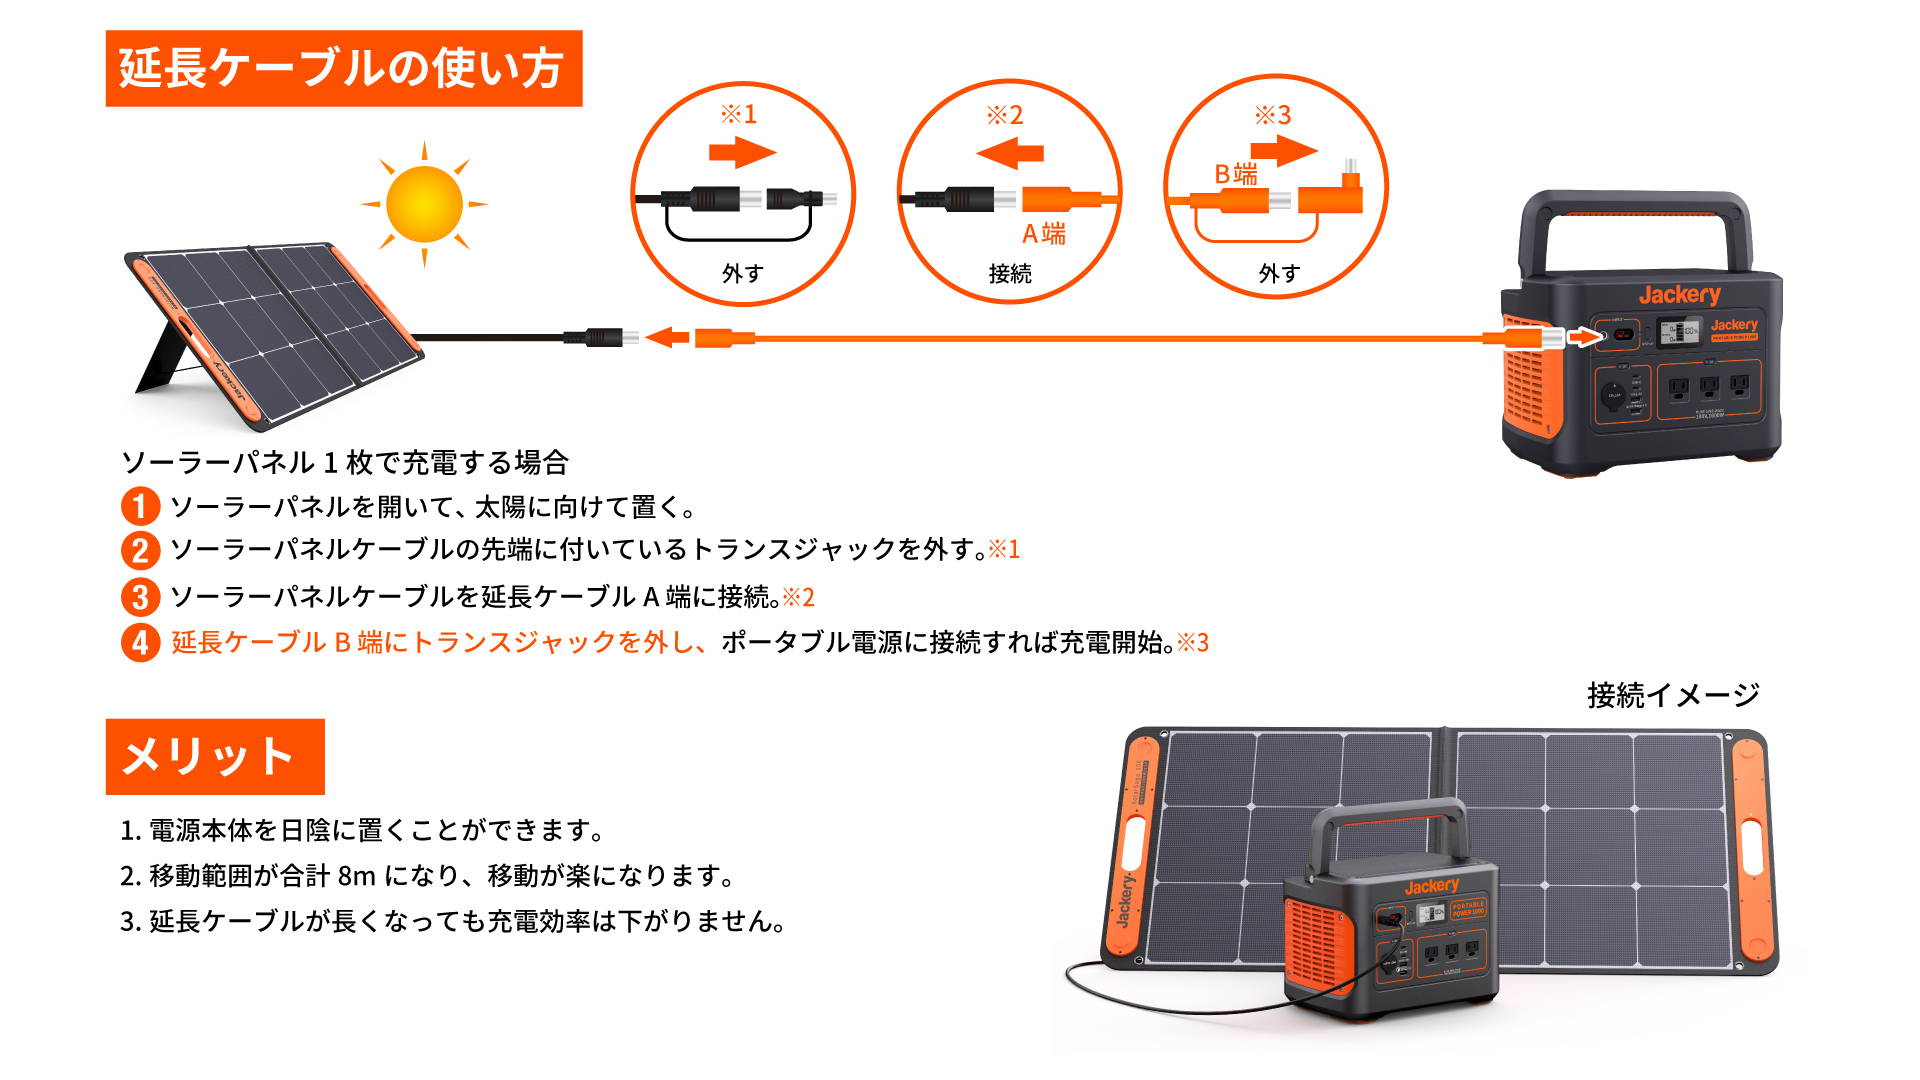 Jackery Solar Generator 1000の使い方